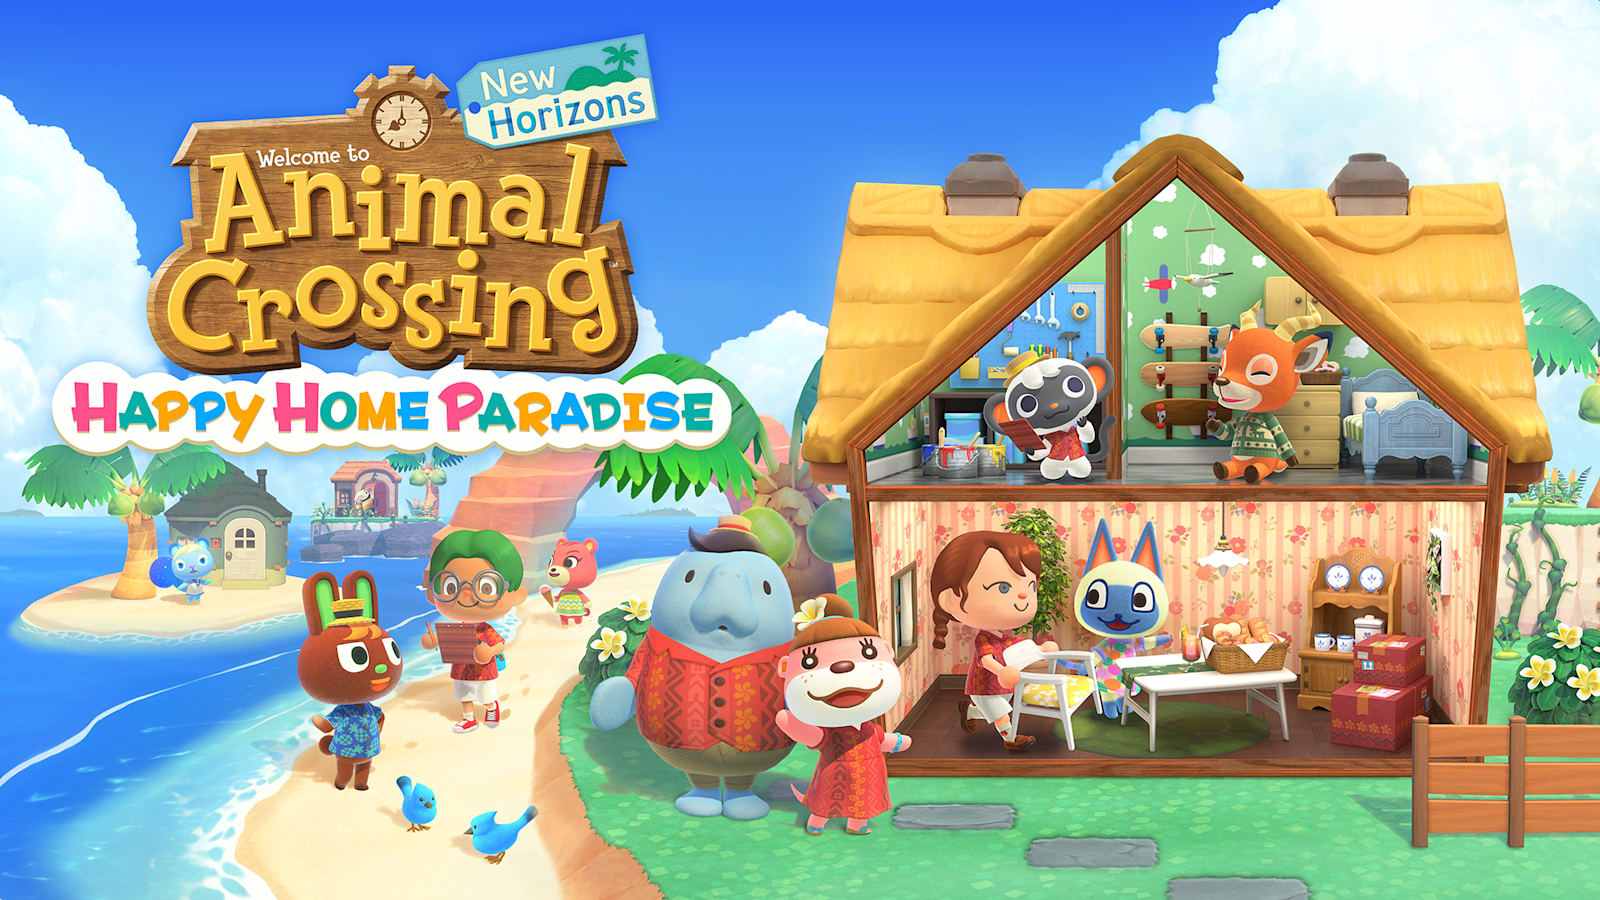 Animal Crossing: New Horizons – Happy Home Paradise key visual